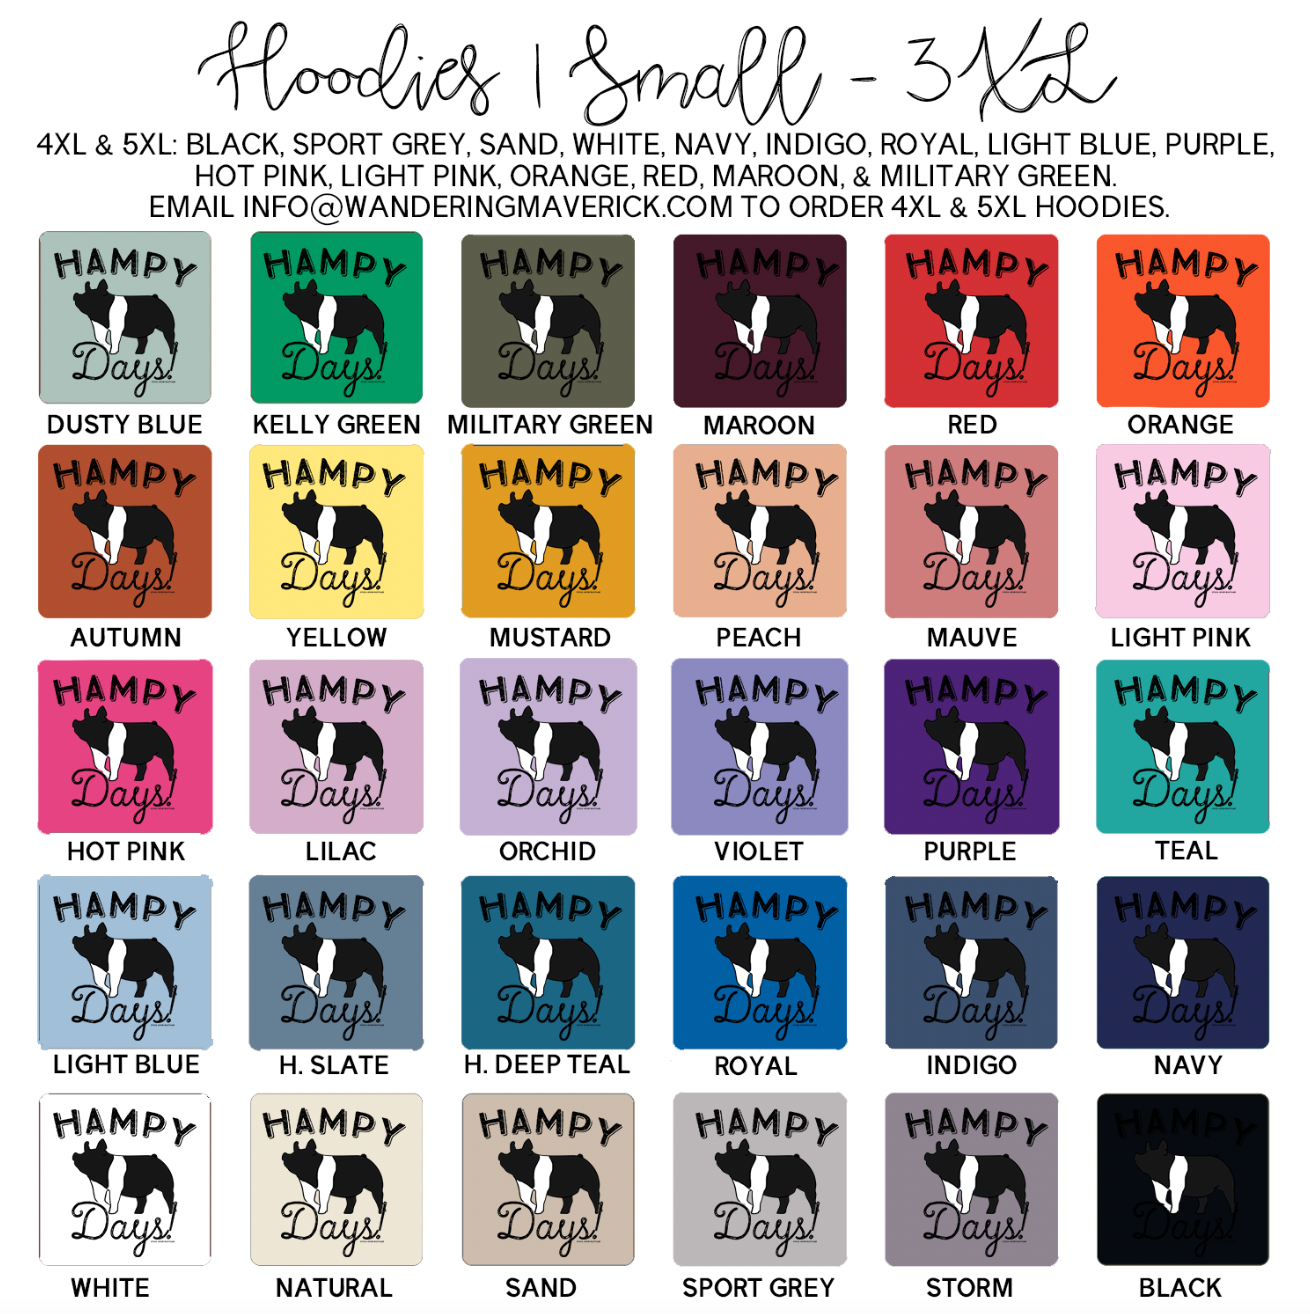 Hampy Days Hoodie (S-3XL) Unisex - Multiple Colors!